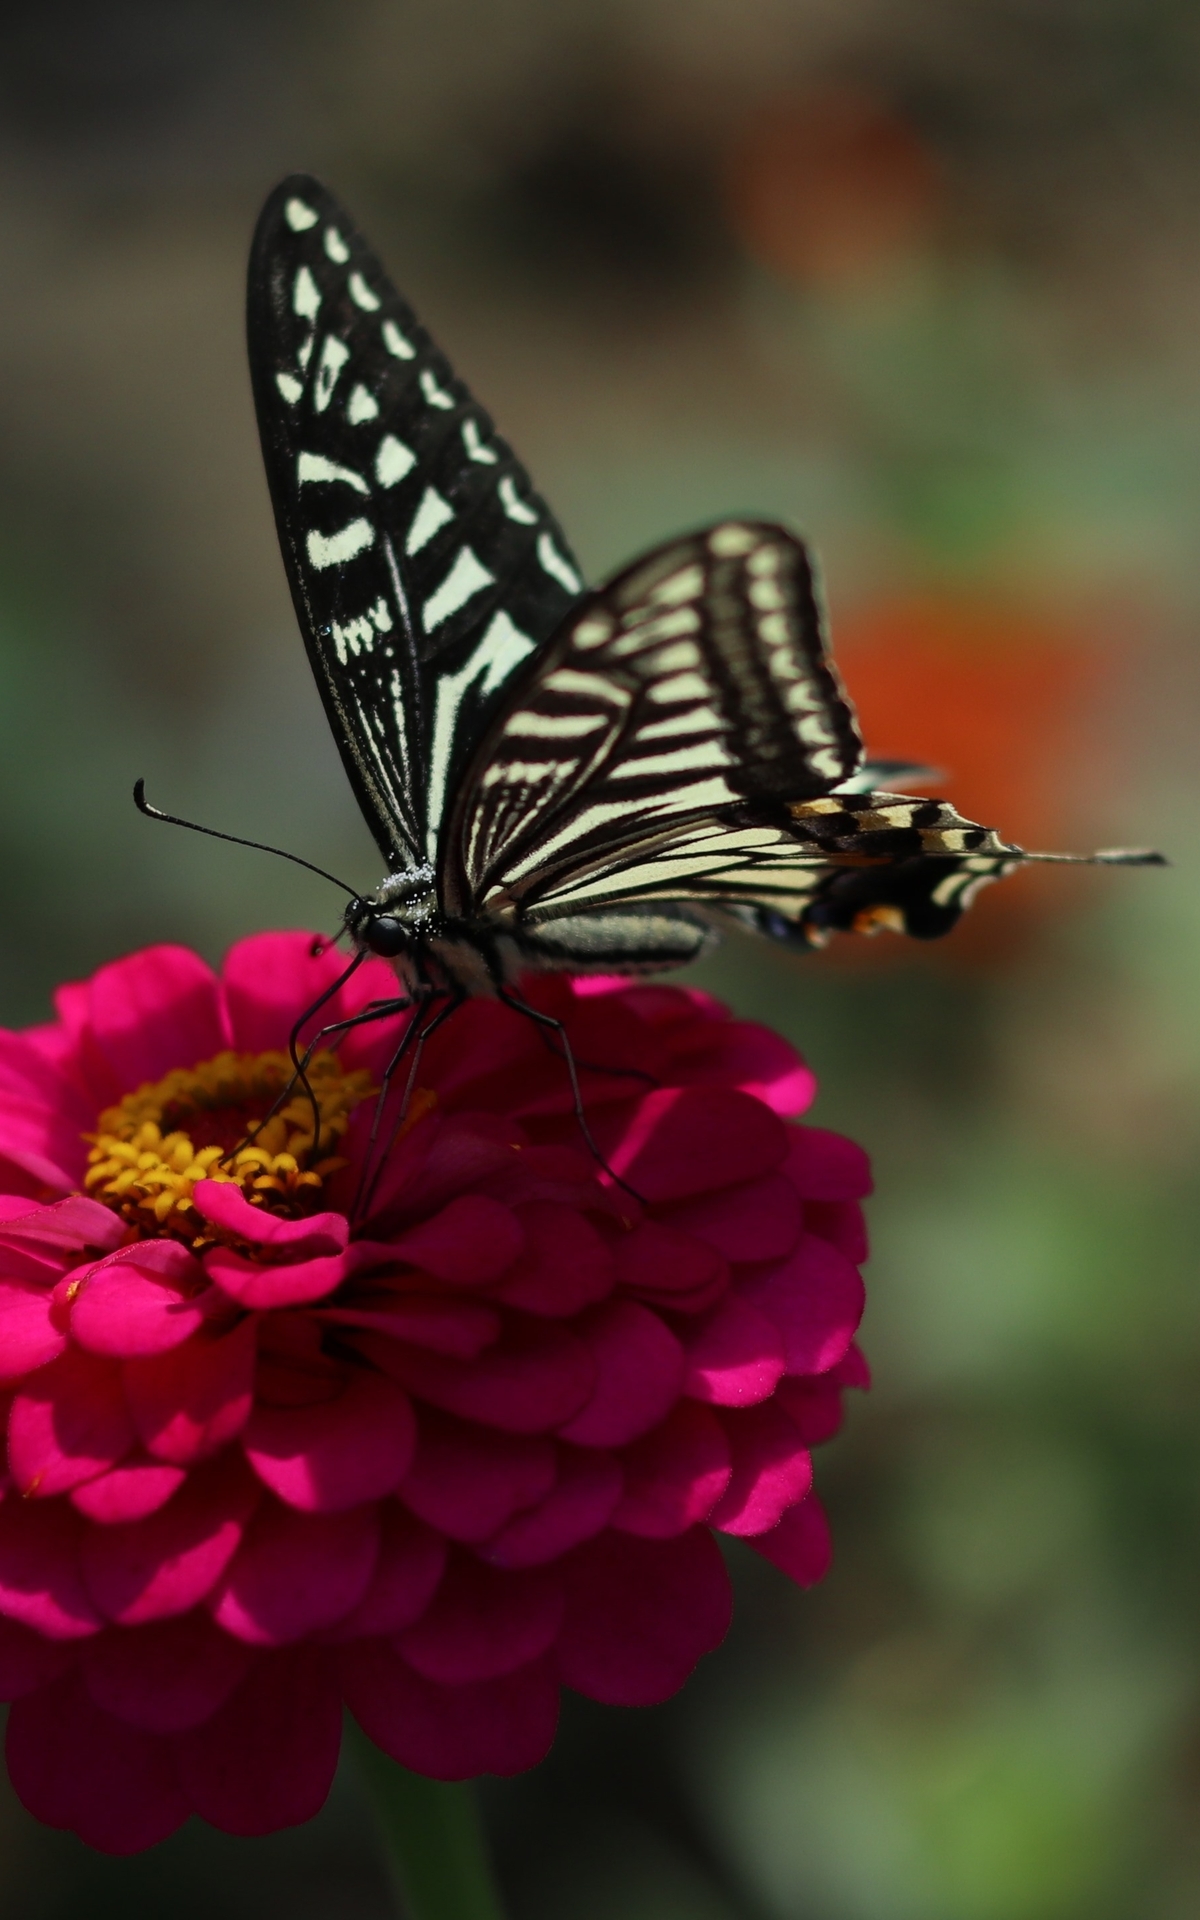 Картинка: бабочка, чёрно-белая бабочка, цветы